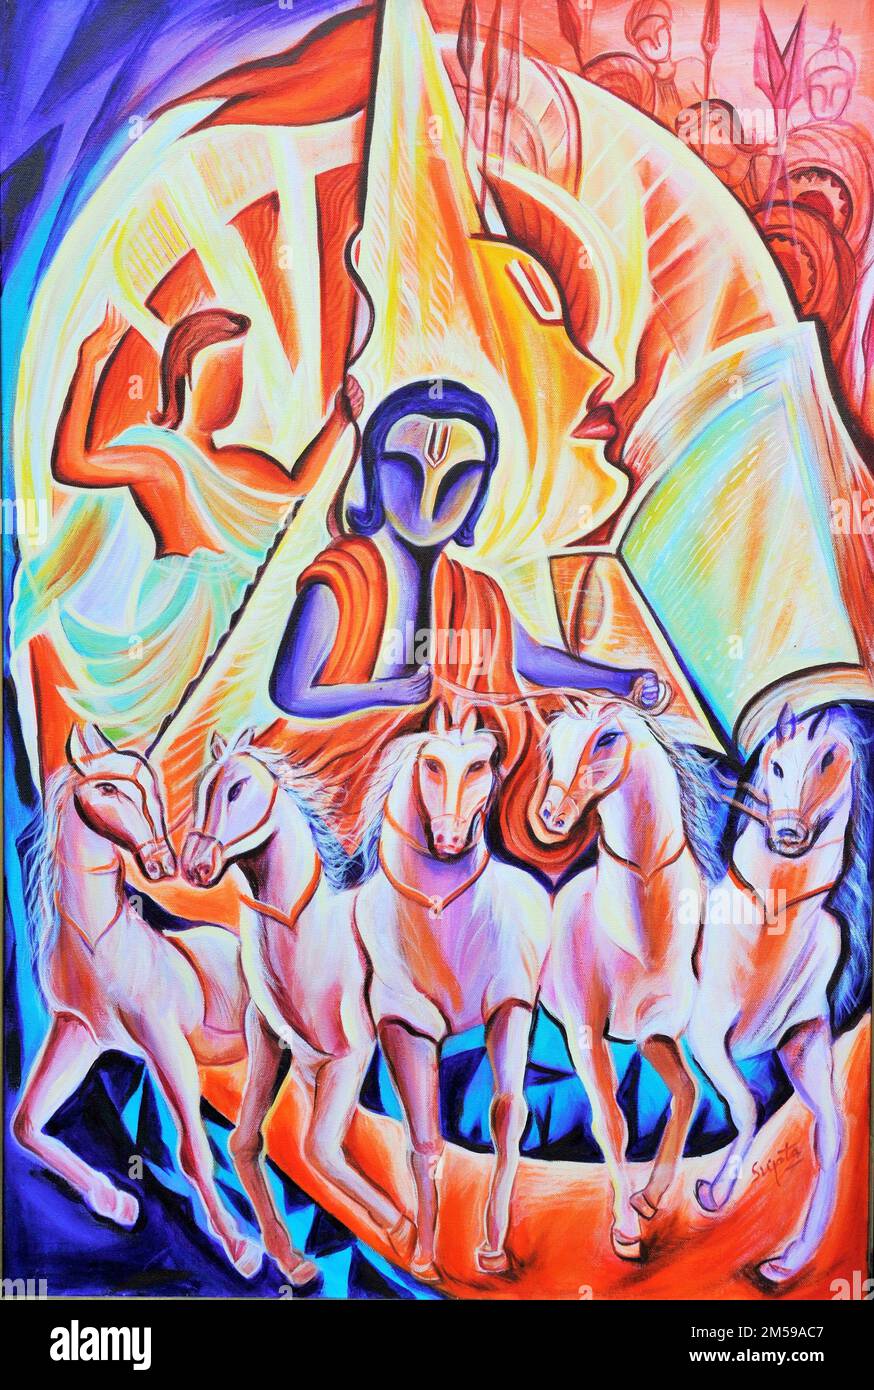 Lord Krishna riding horses artwork painting Stock Photo